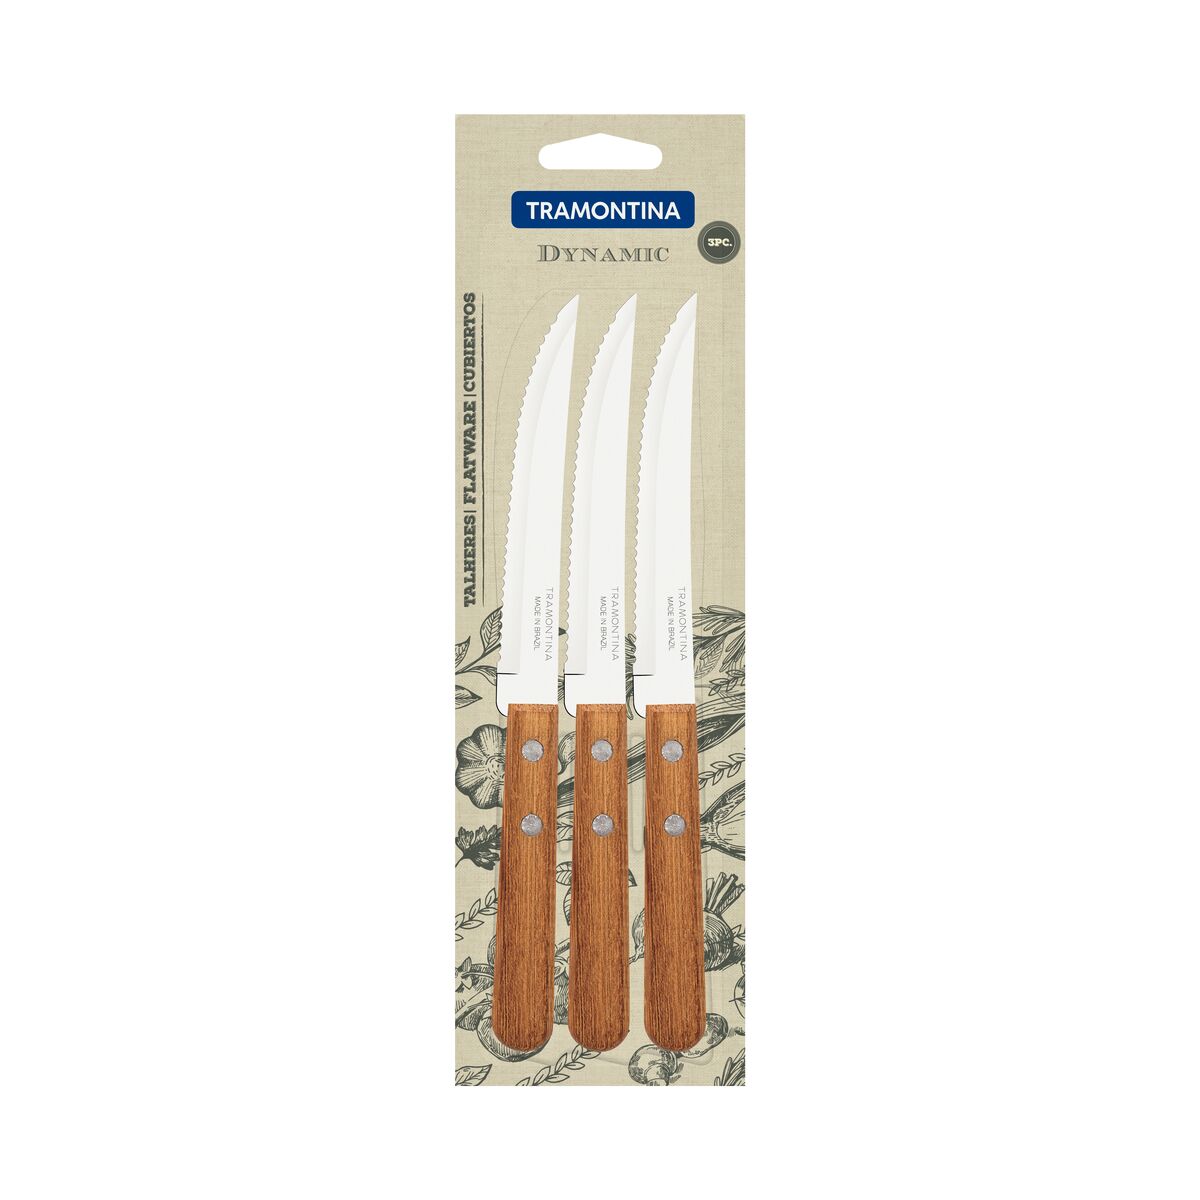 Tramontina Steak Knife 3pcs Set - 22300/305